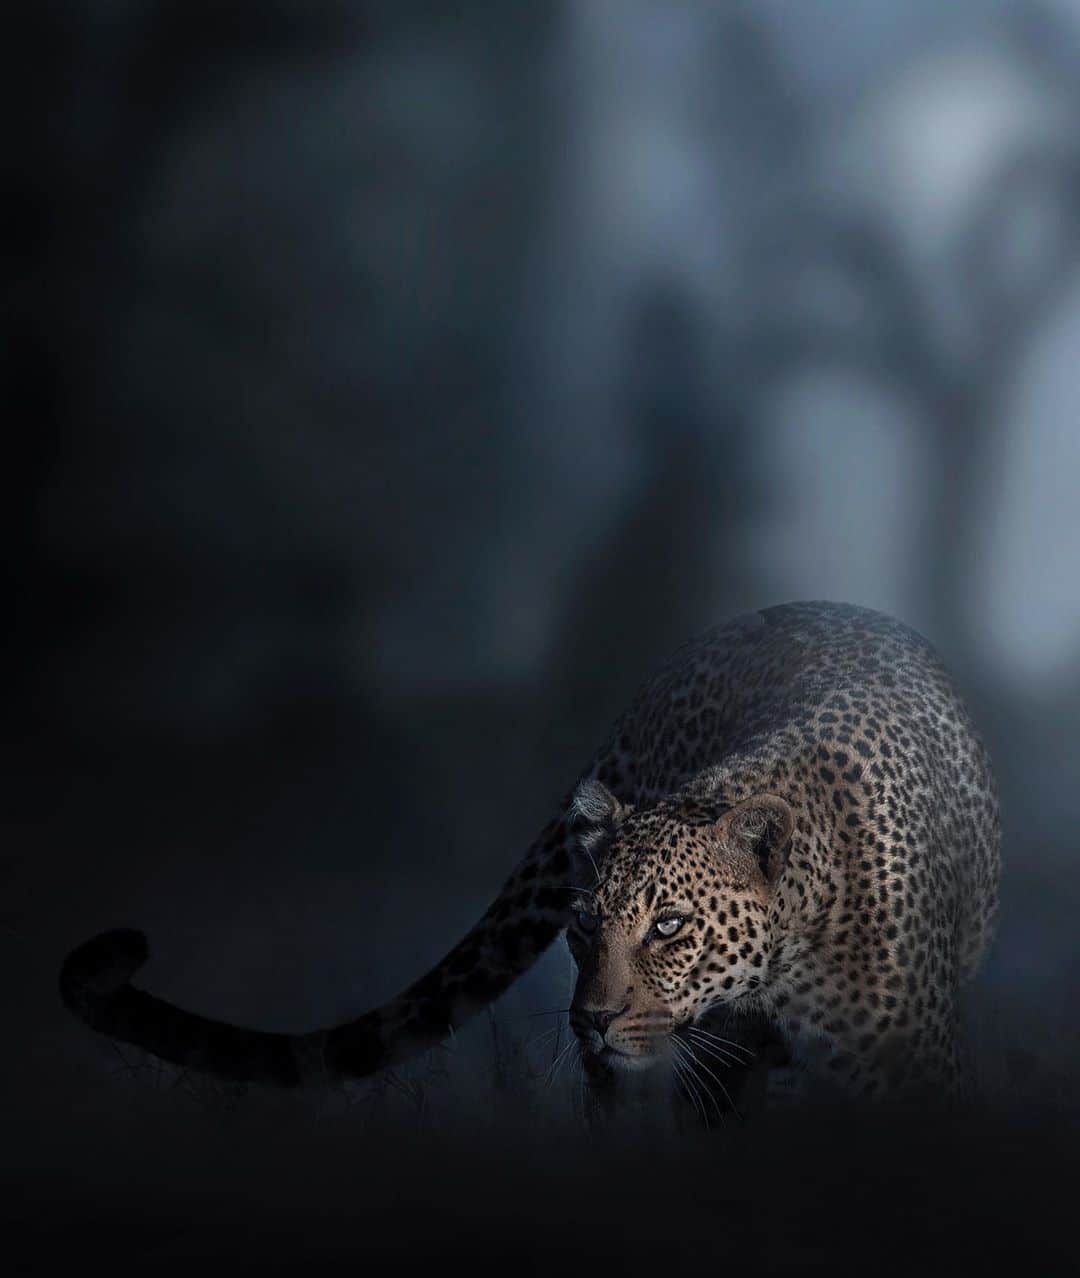 Fotografías de vida silvestre por Shaaz Jung